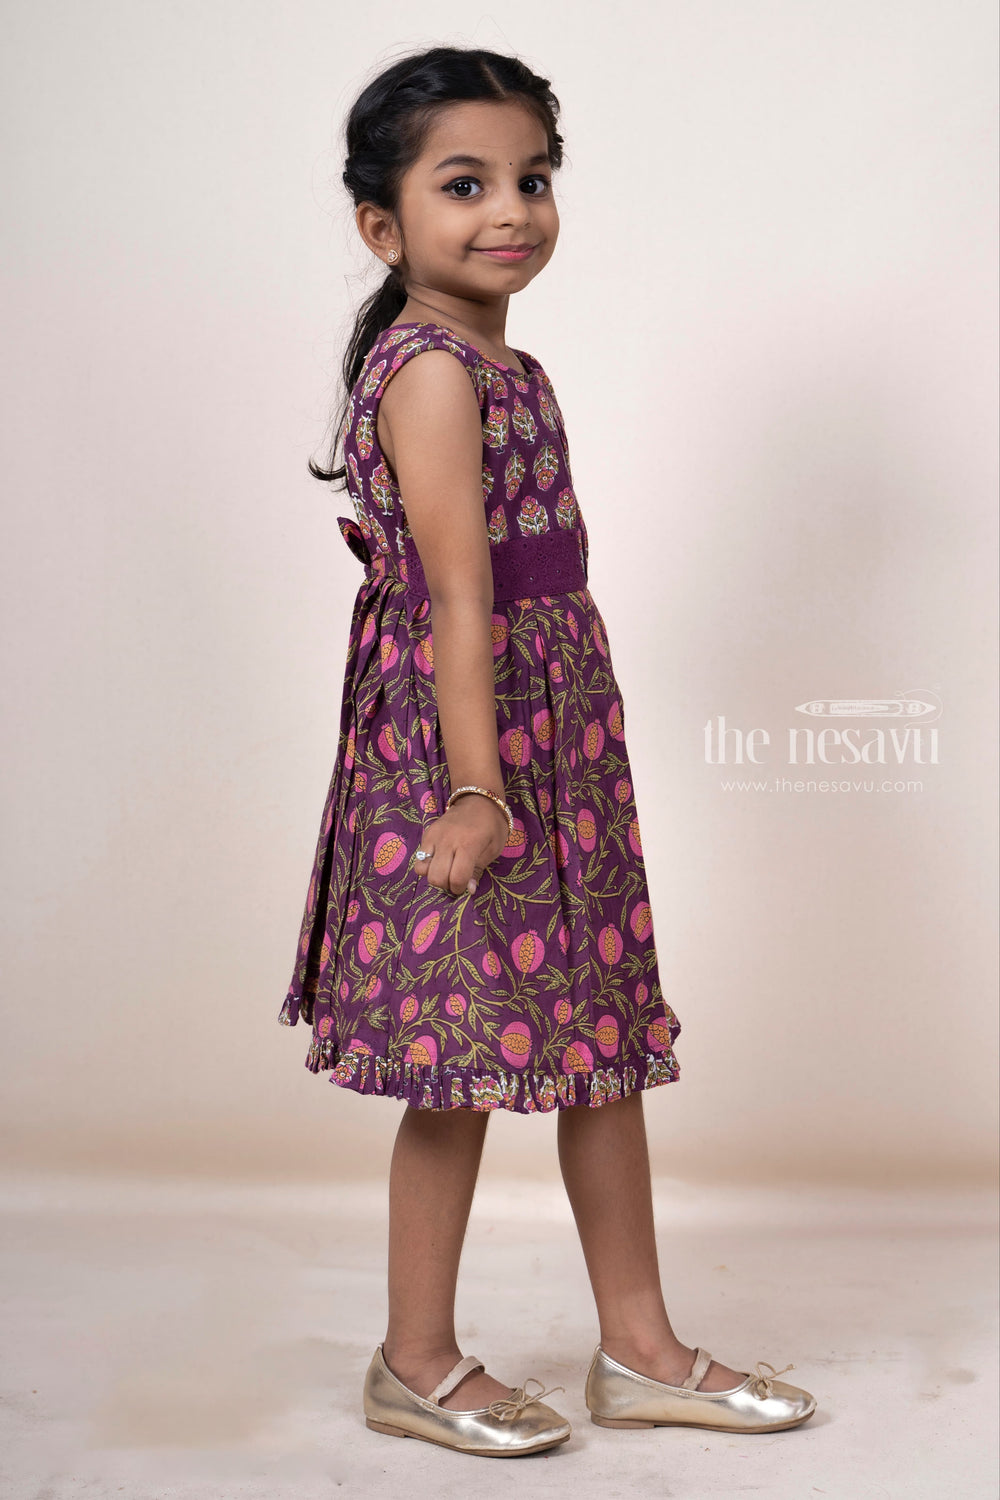 The Nesavu Frocks & Dresses Magenta Pink Floral Pin-Tucked Soft Cotton Gown For Baby Girls psr silks Nesavu